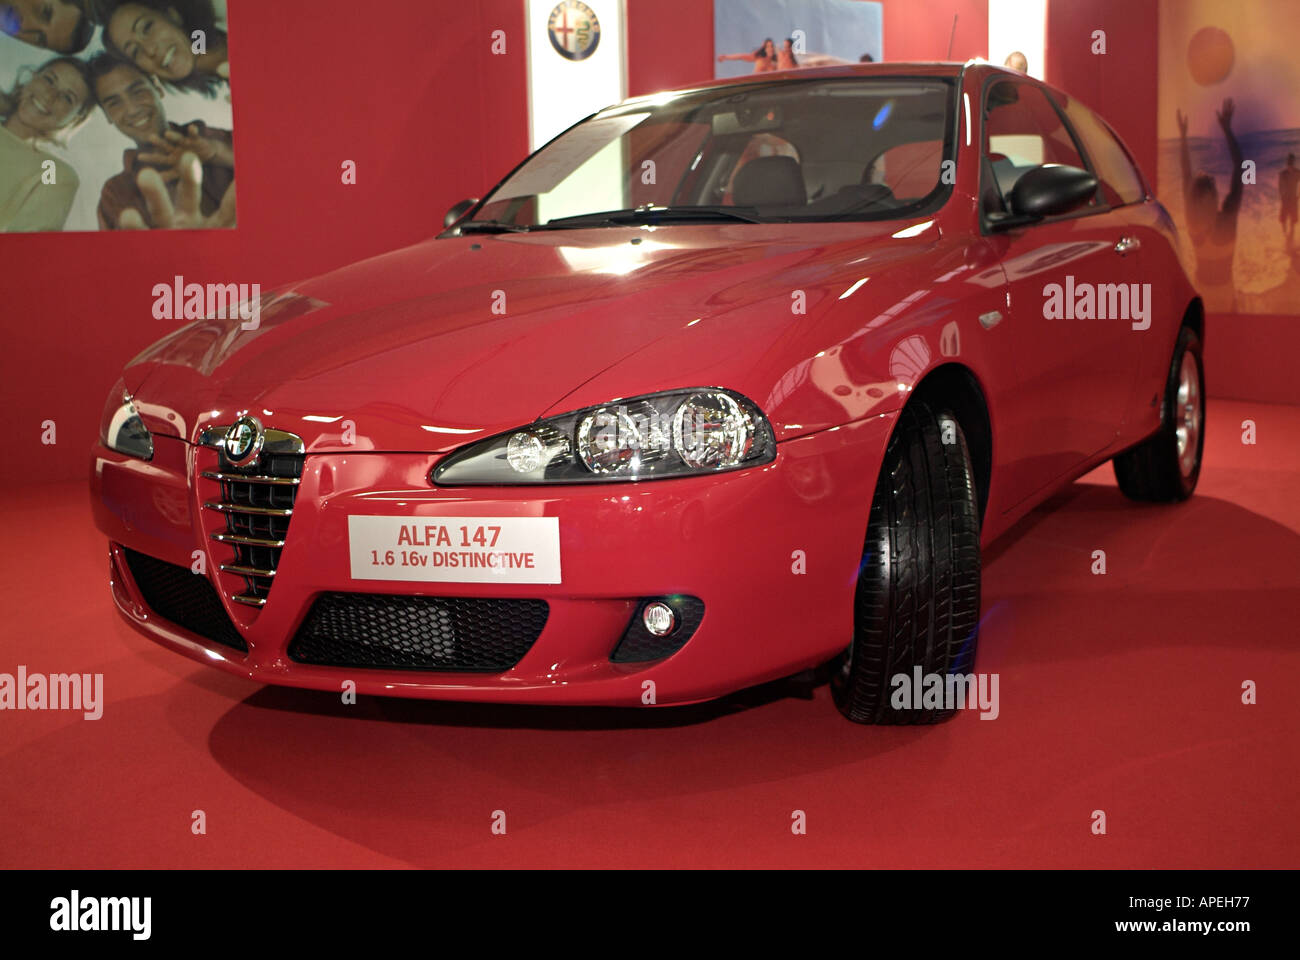 Red Alfa Romeo 147 on Display at a Car Show Stock Photo